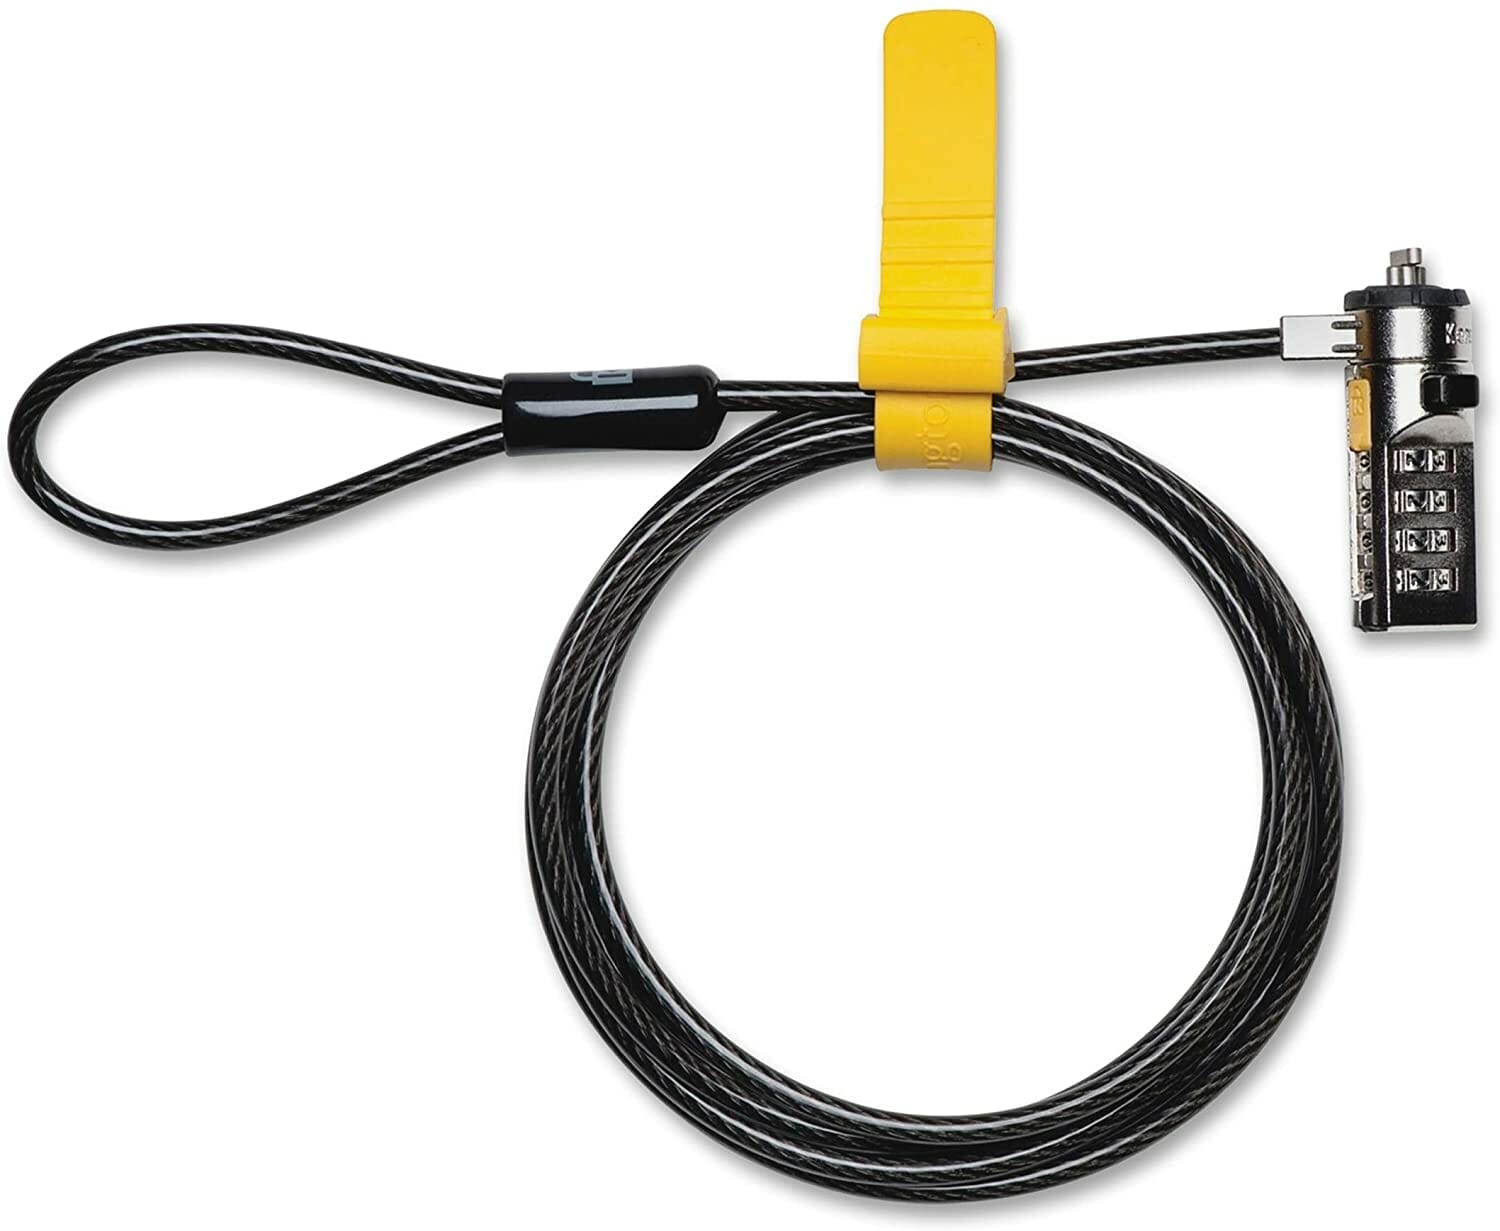 Kensington Combination Cable Lock for Laptop